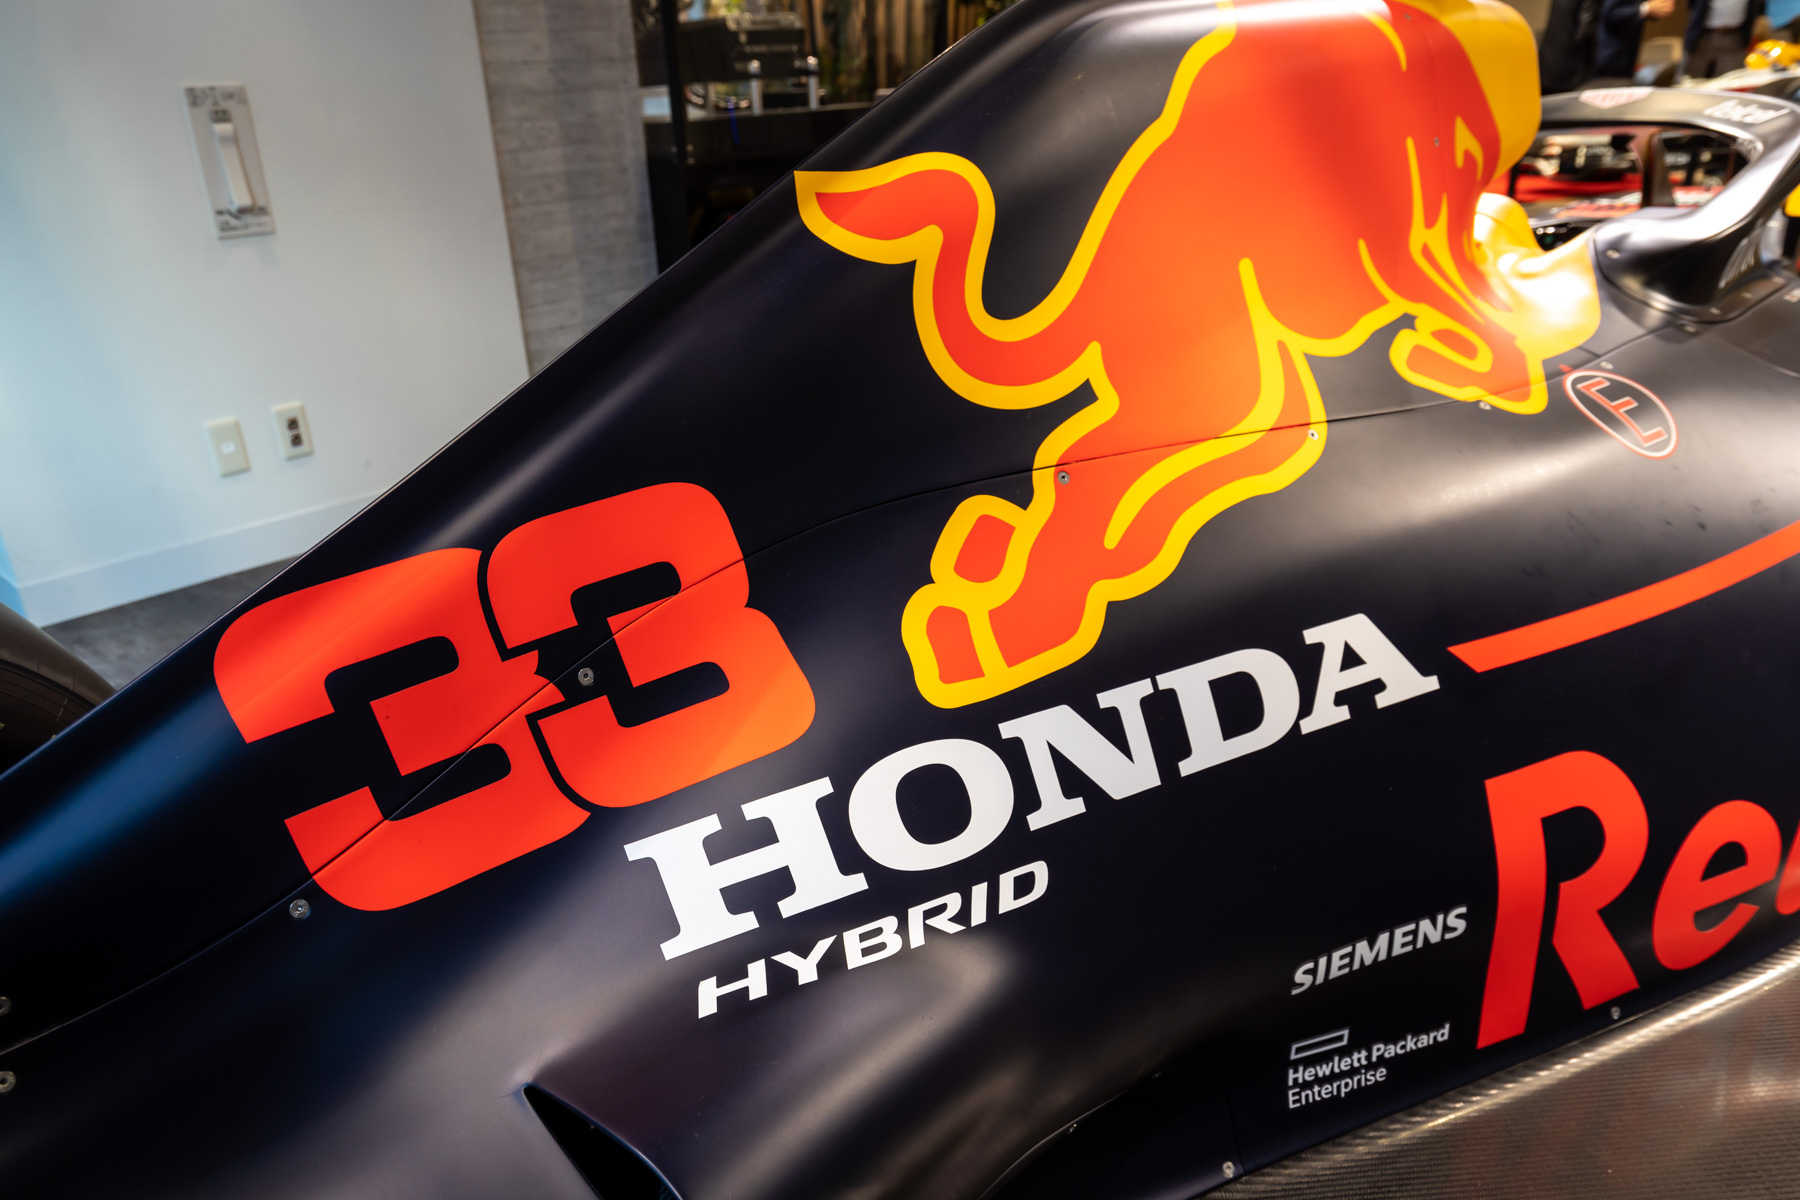 Red Bull Honda